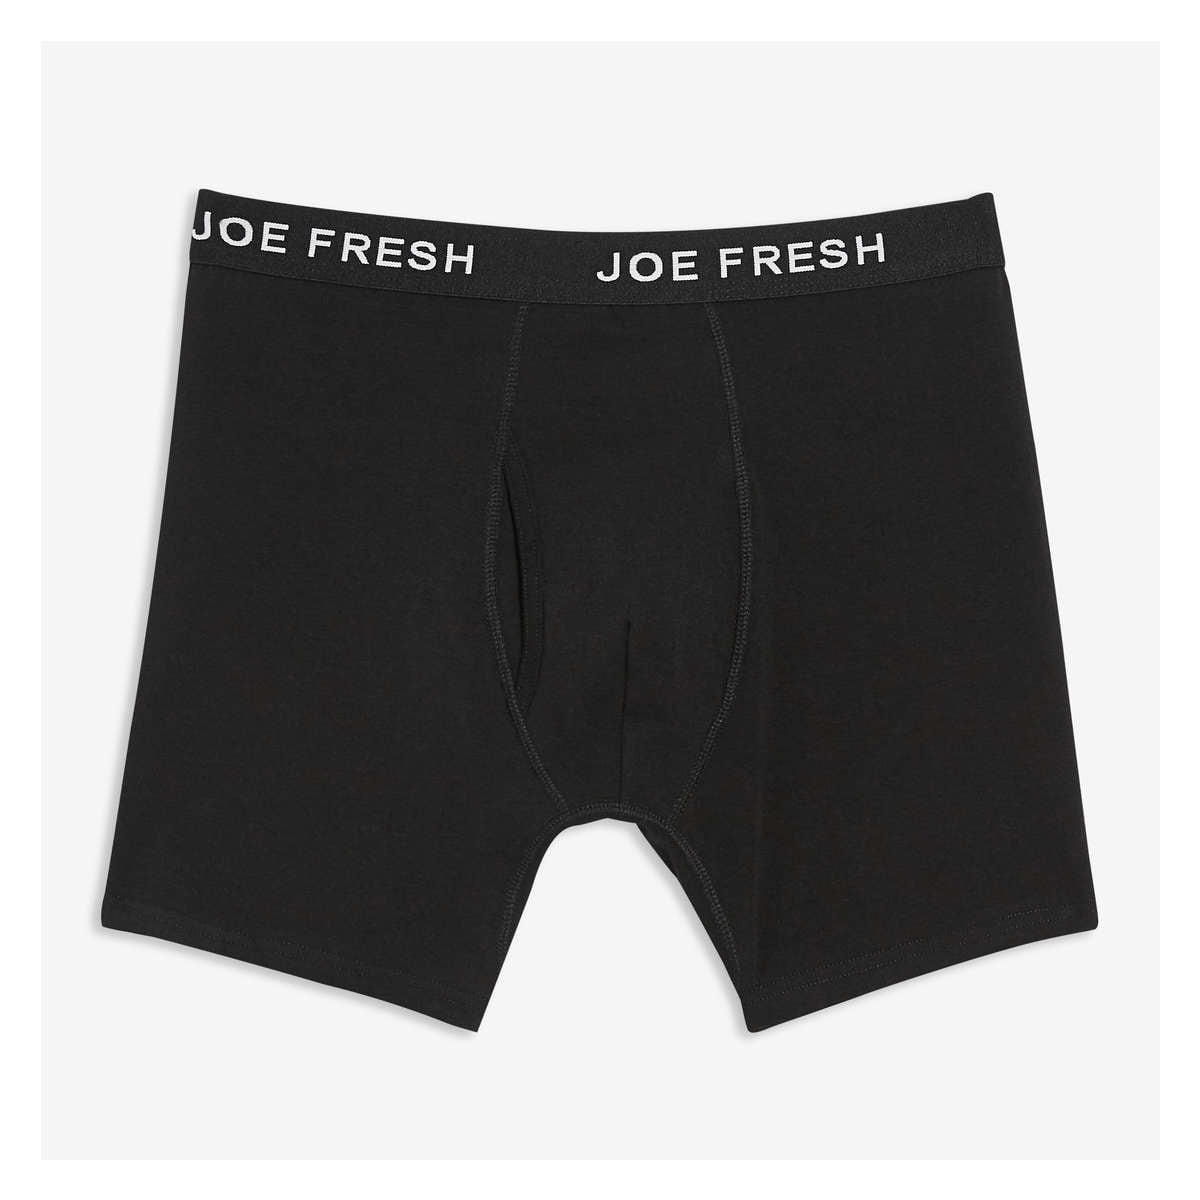 Lace Trim High-Cut Briefs in Black from Joe Fresh